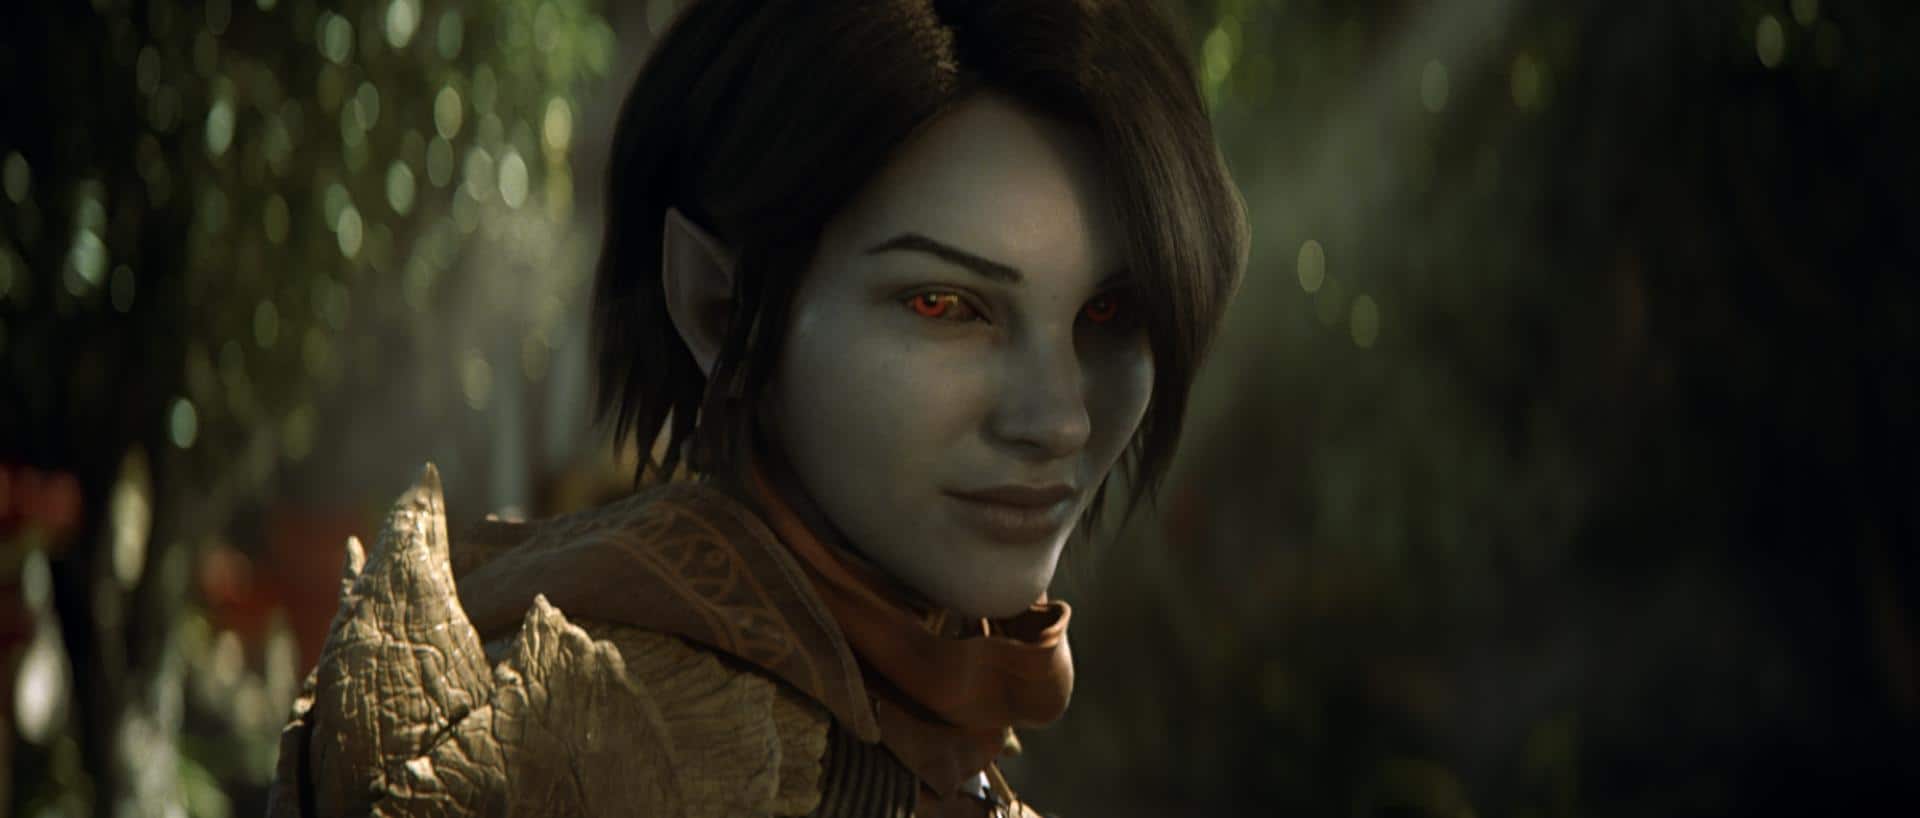 The Elder Scrolls Online Morrowind Gameplay Showcased In Brand New Trailer